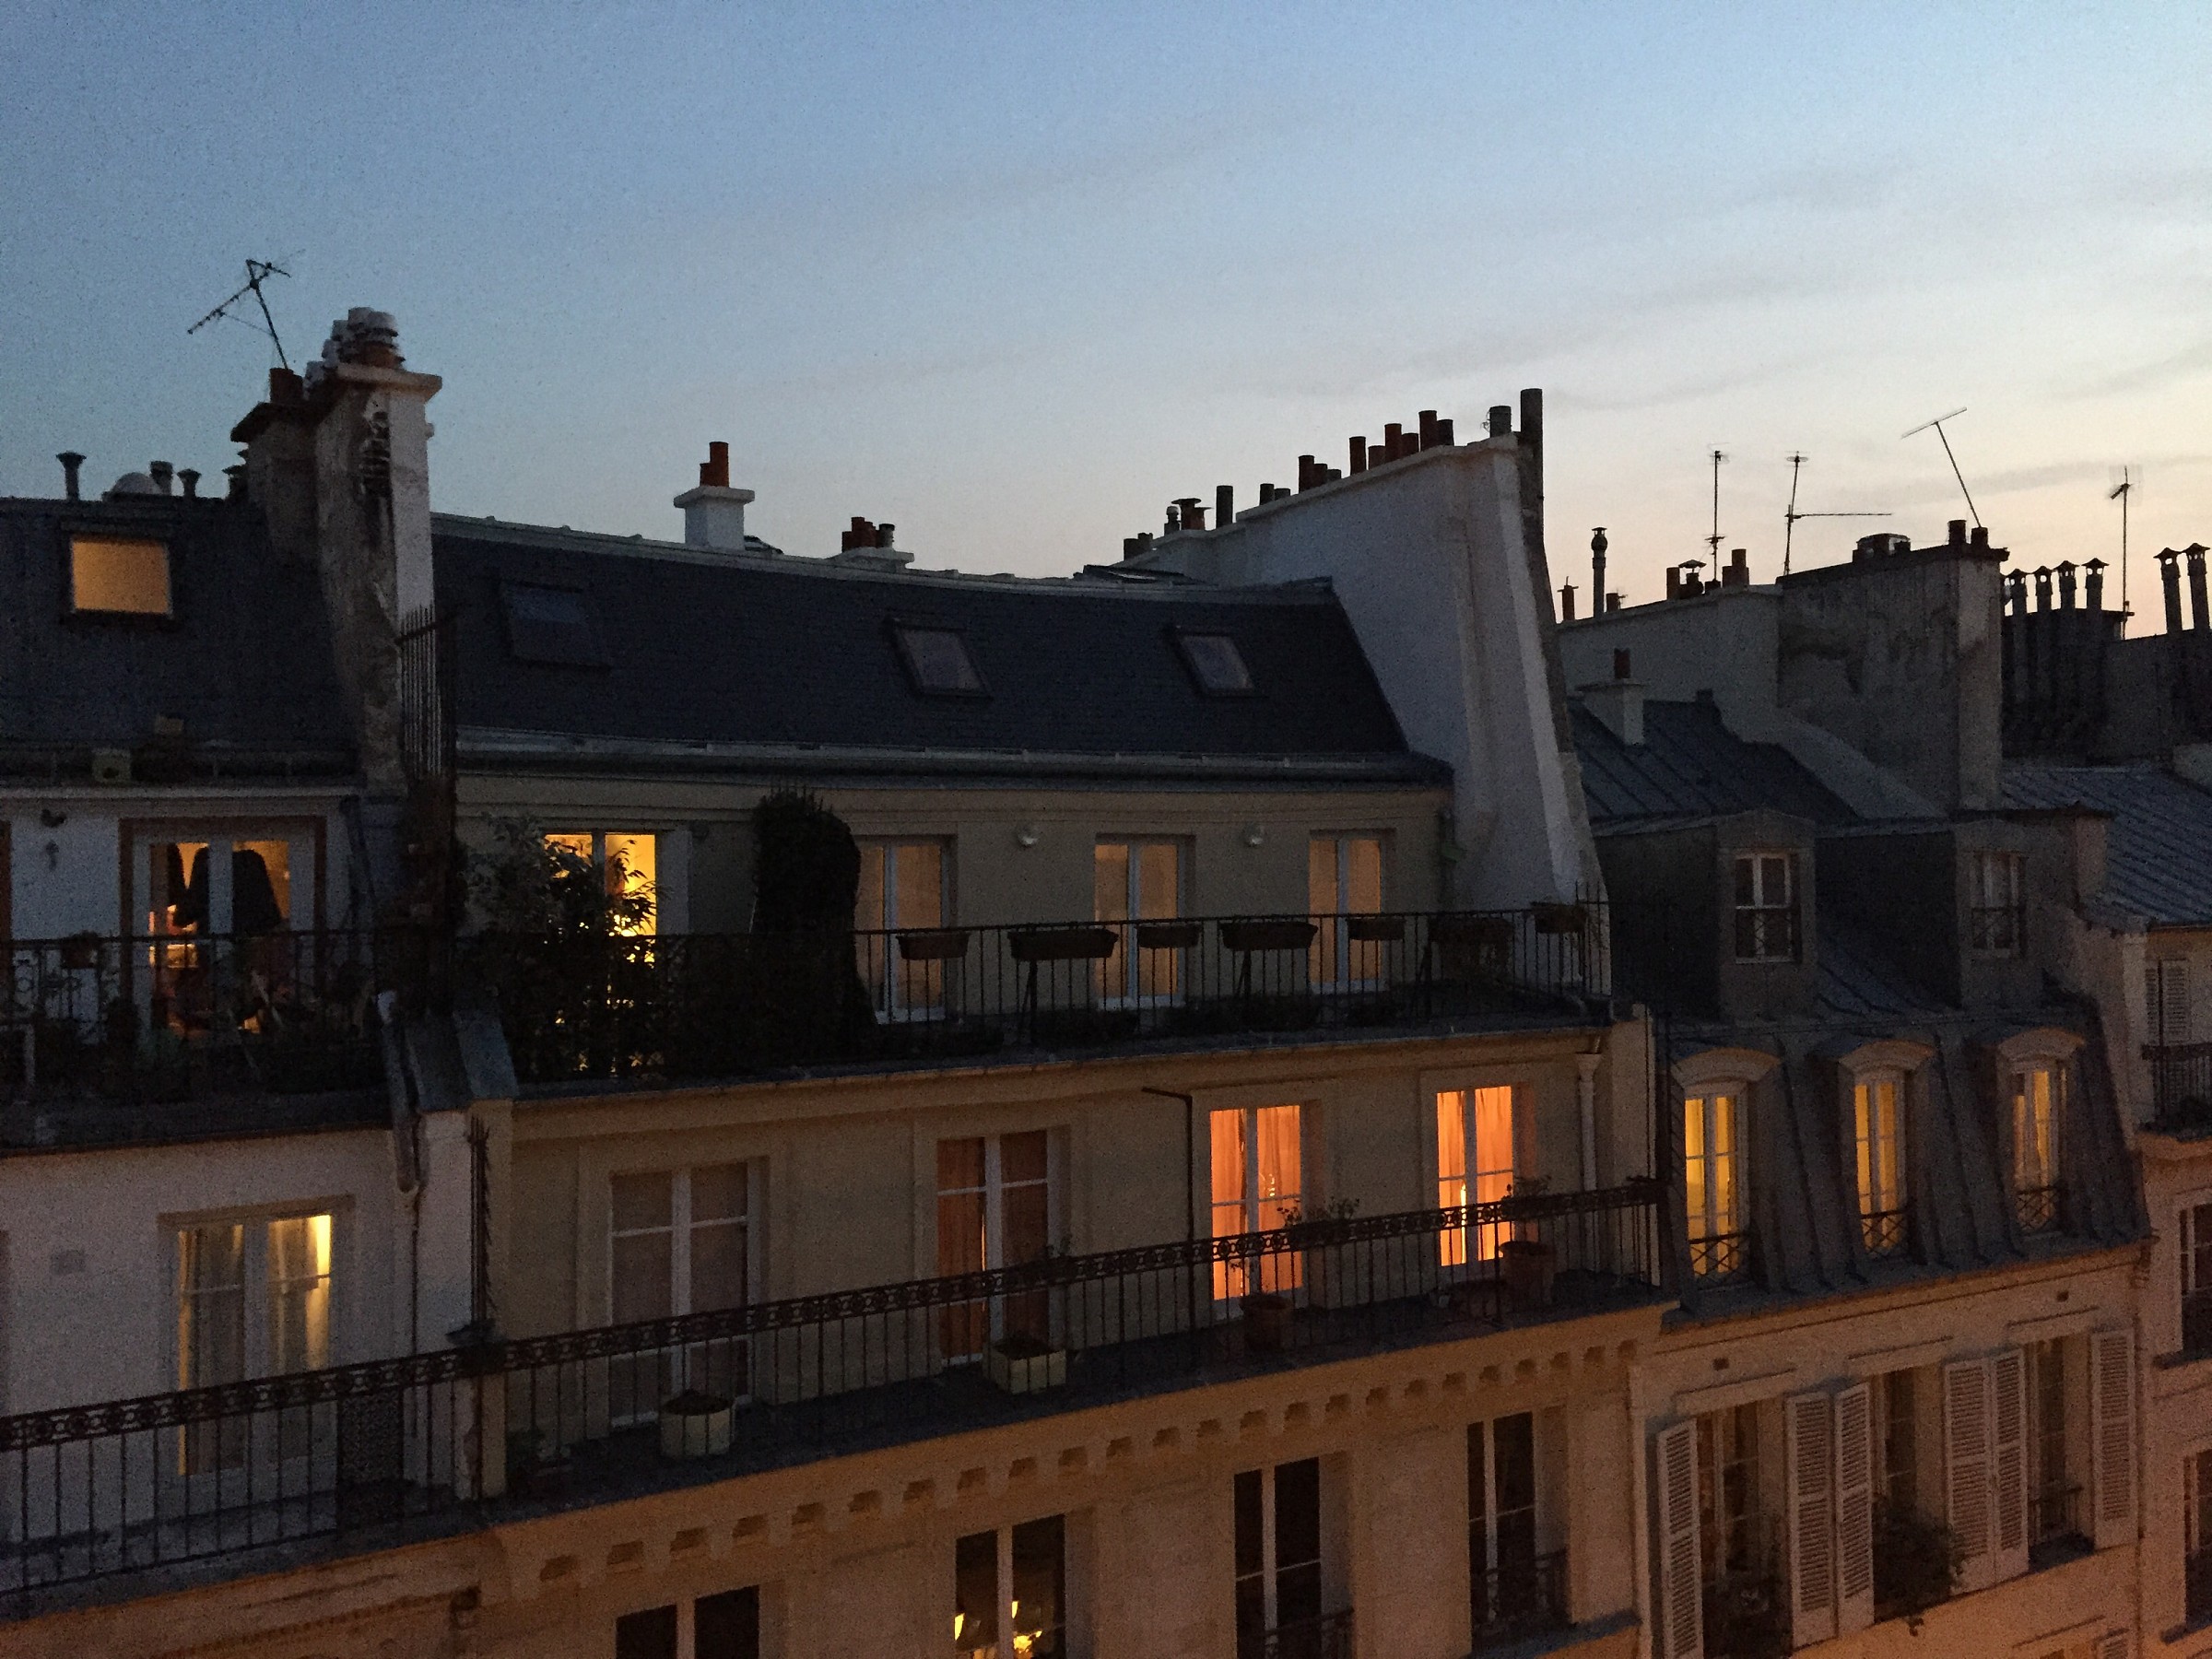 Parisian rooftops...